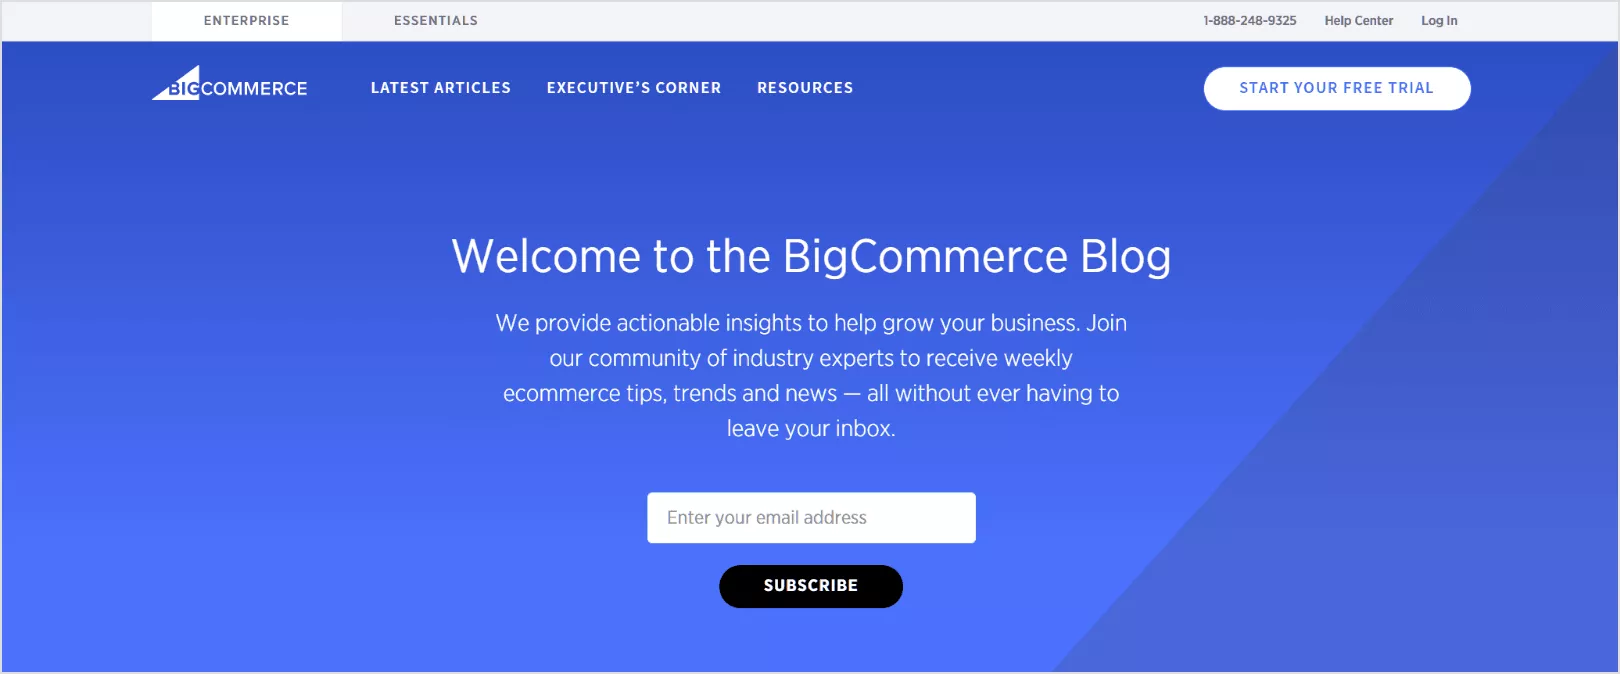 The BigCommerce Blog